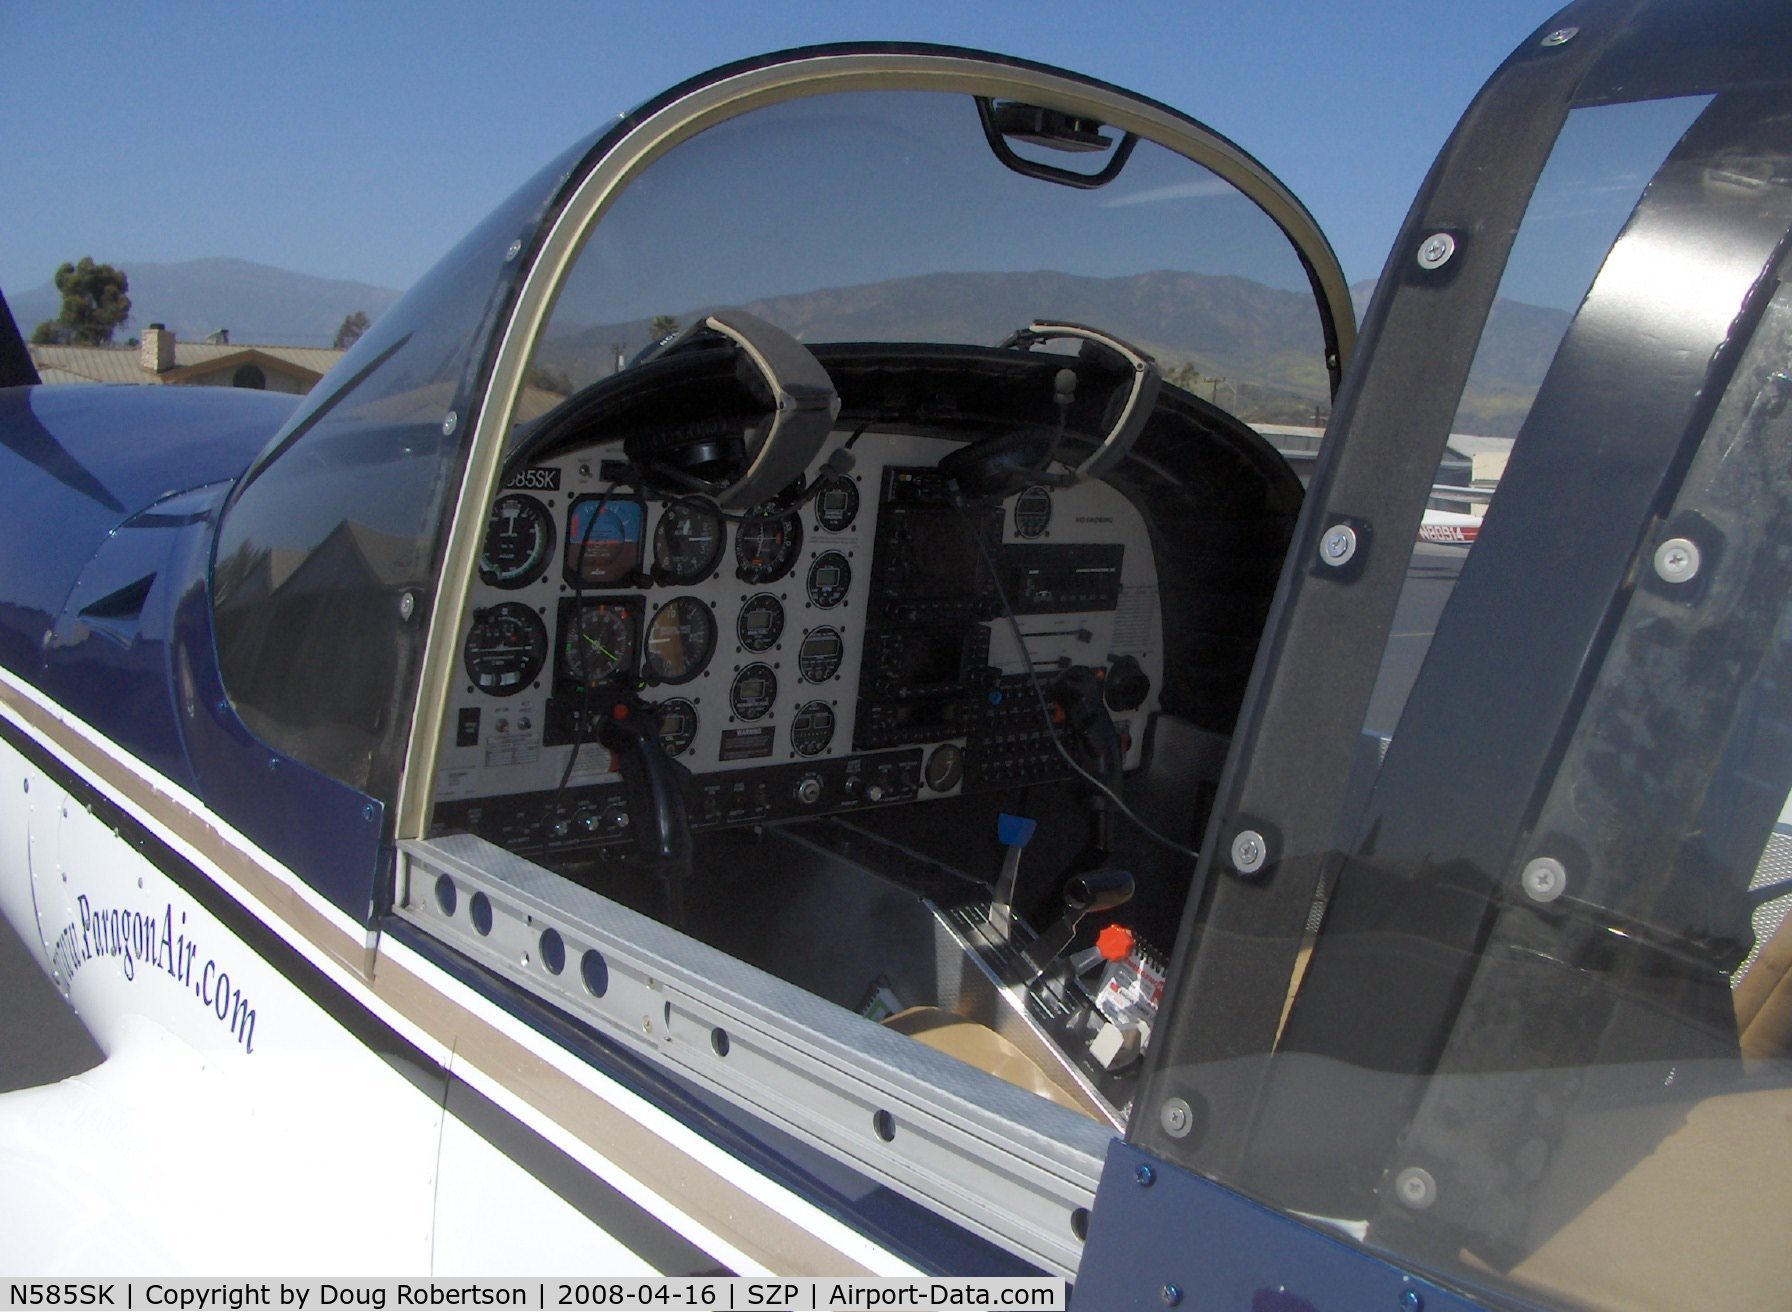 N585SK, 2003 Lanshe Aerospace Llc MAC-145B C/N 260013, 2003 Lanshe Aerospace LLC MAC-145B (Micco SP26A for Aerobatic), Lycoming IO-540-T4B5 260 Hp, good panel with partial glass panel